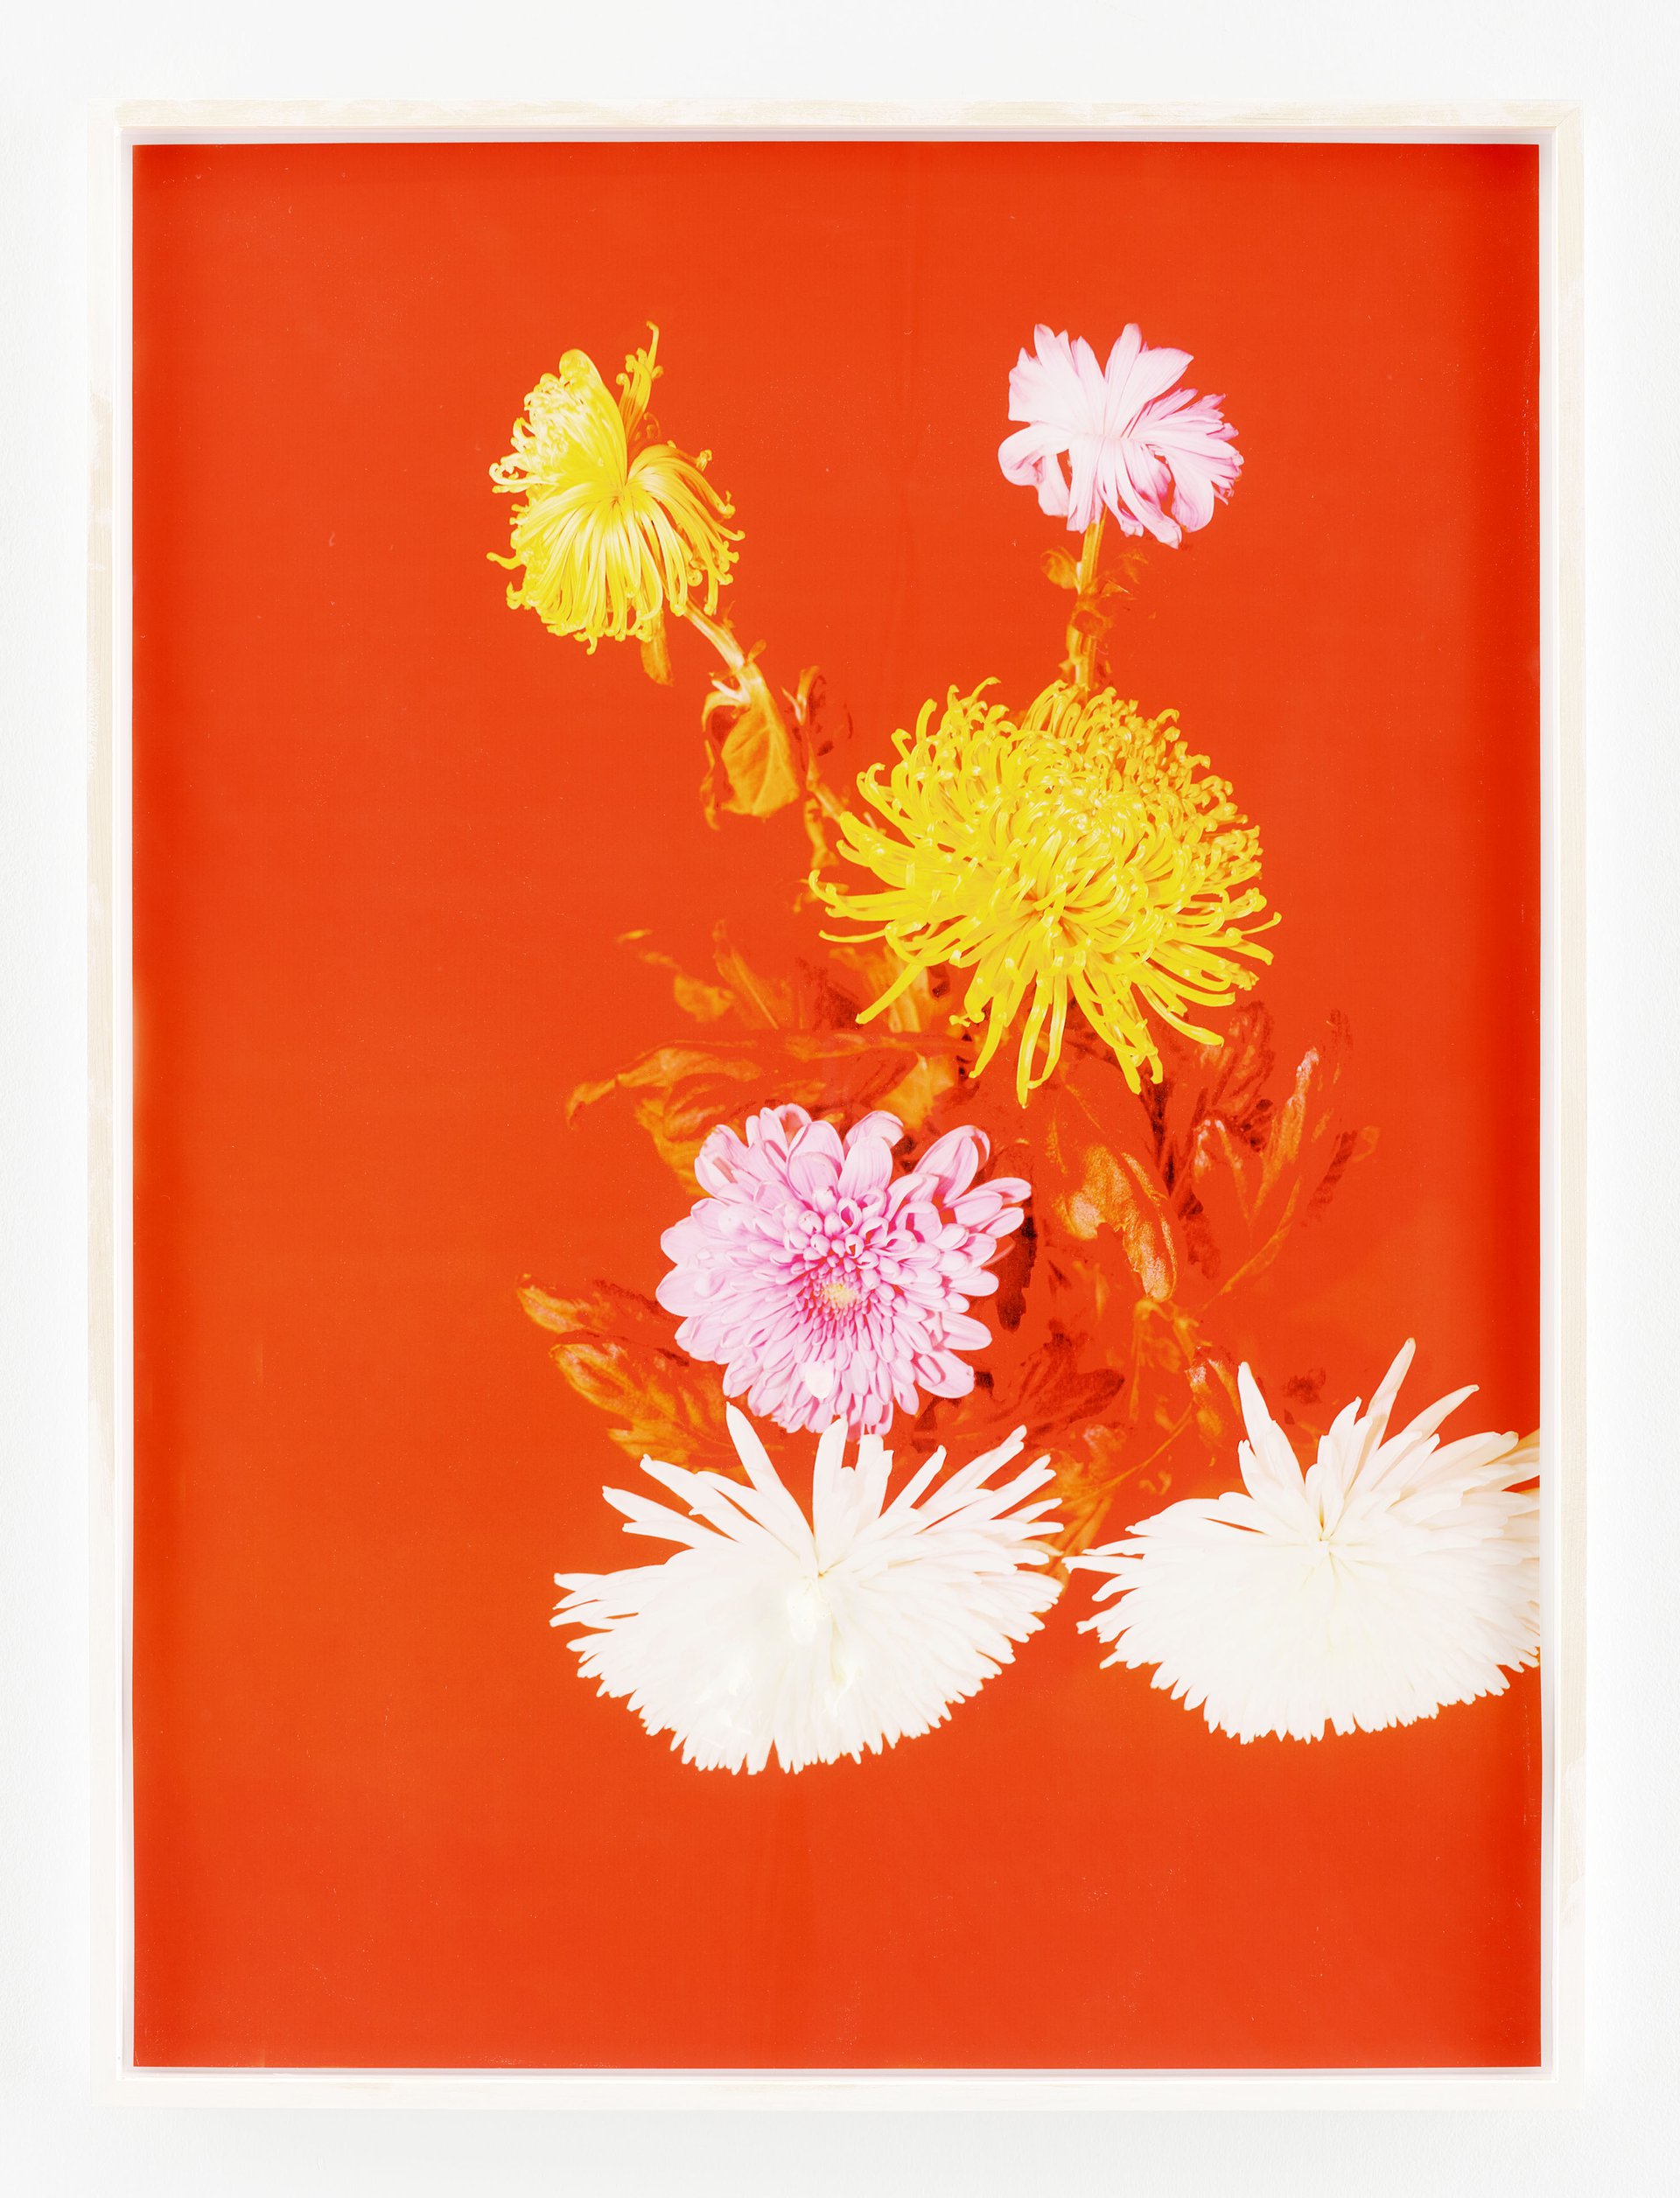 Lisa HolzerTodesblumen ohne grün (Chrysanthemen) / Flowers of death devoid of green (chrysanthemums), 2018Pigment print on cotton paper, semigloss enamel on wood, vanilla ice cream on glass110 x 82 cm